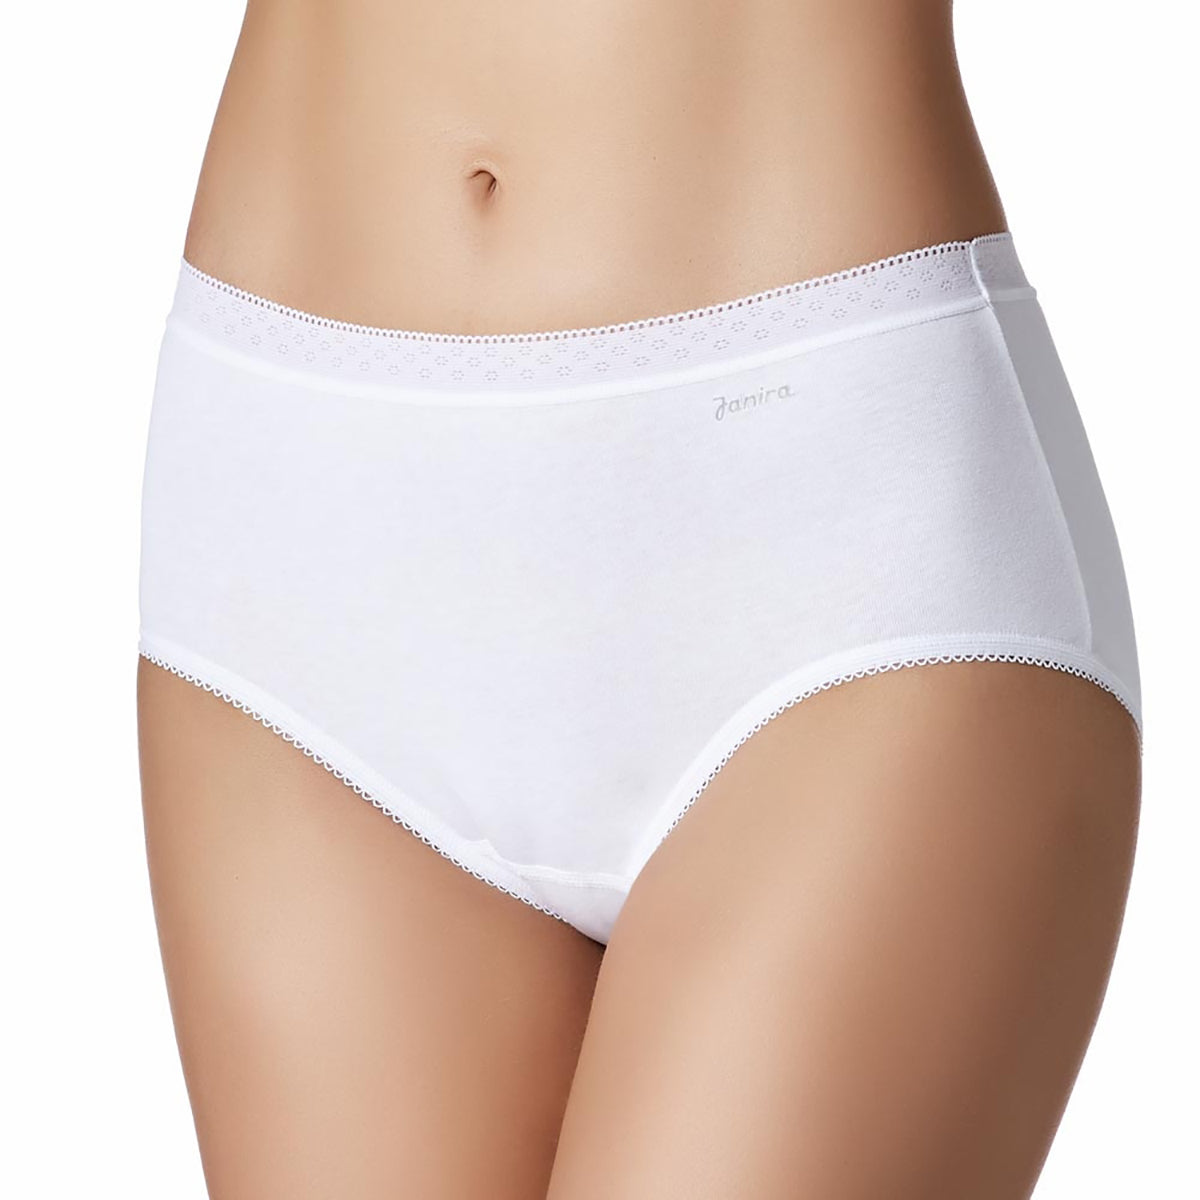 Hanes Women's Plus Size Cotton Underwear, 6 Panama